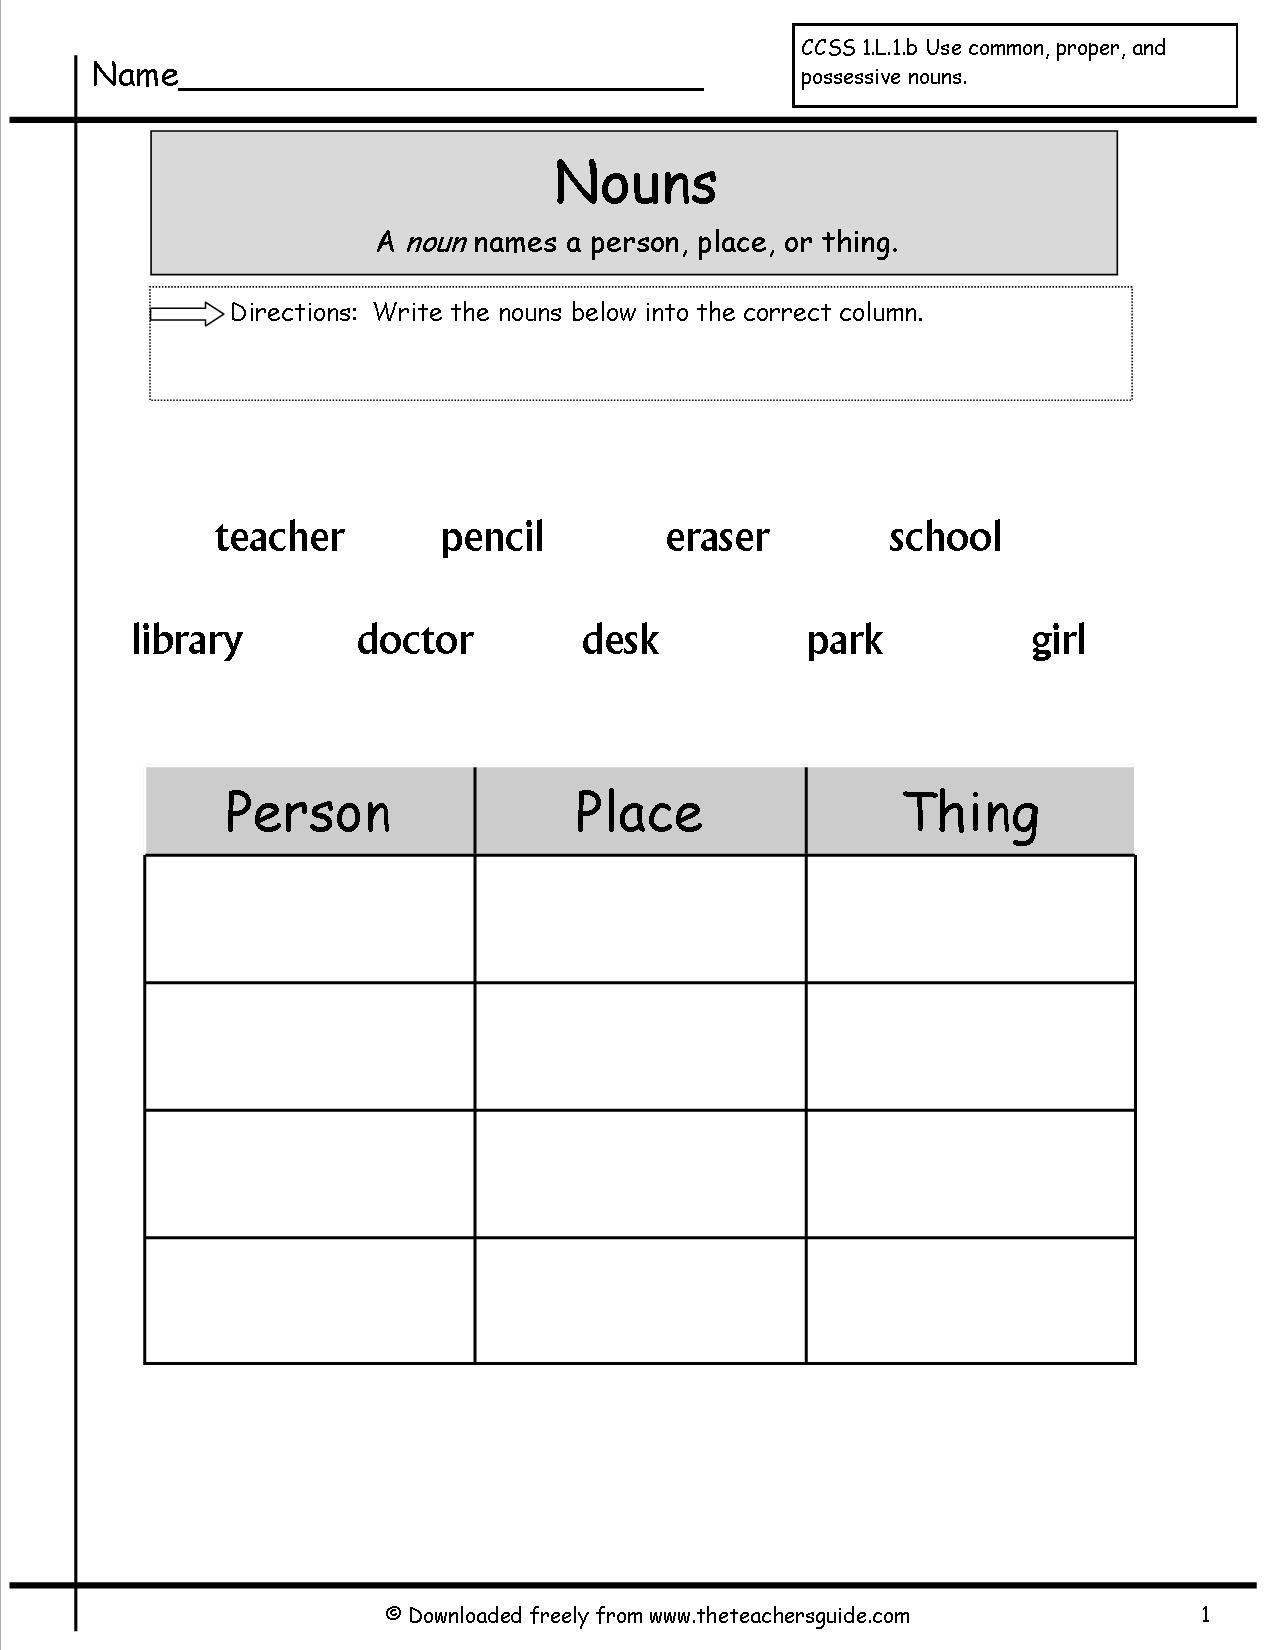 Grammer Printables | Nouns Worksheets Nouns Worksheets Identifying - Free Printable Verb Worksheets